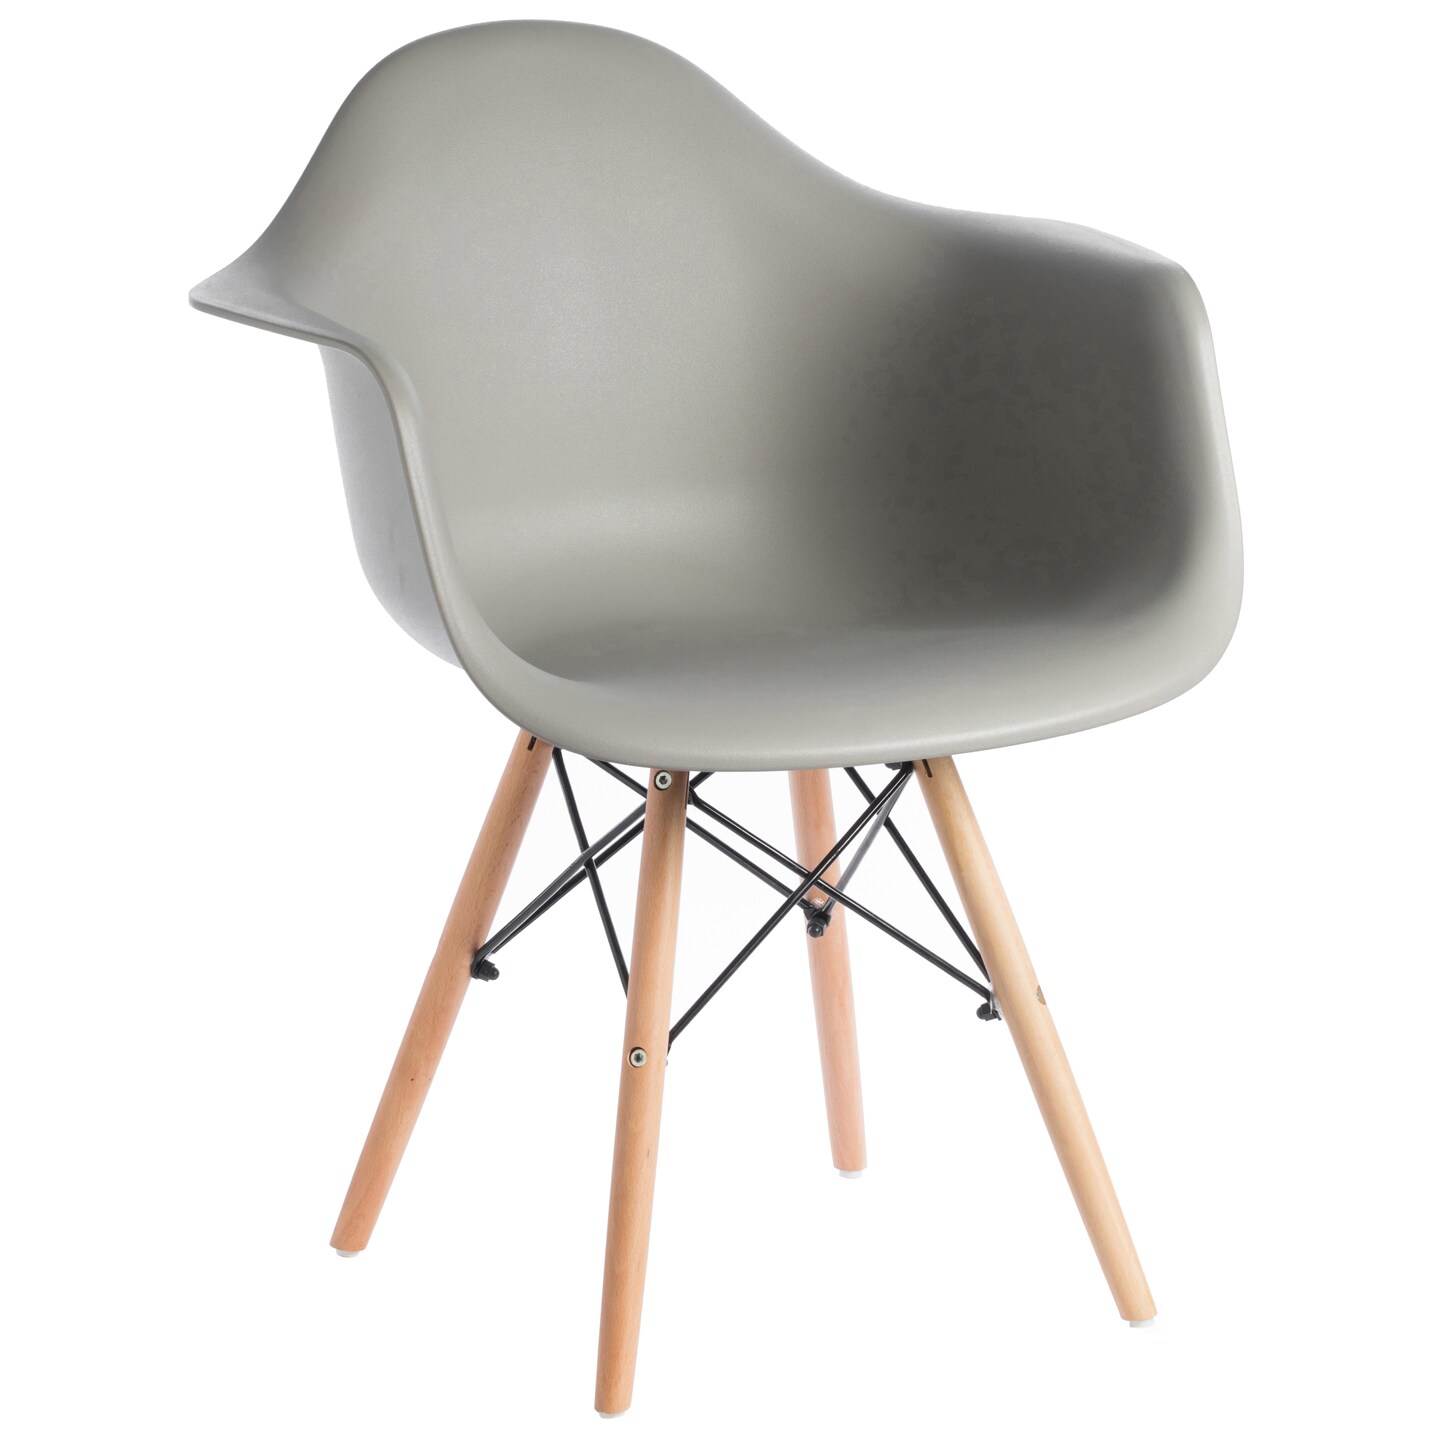 Fabulaxe Mid-Century Modern Style Plastic DAW Shell Dining Arm Chair with Wooden Dowel Eiffel Legs